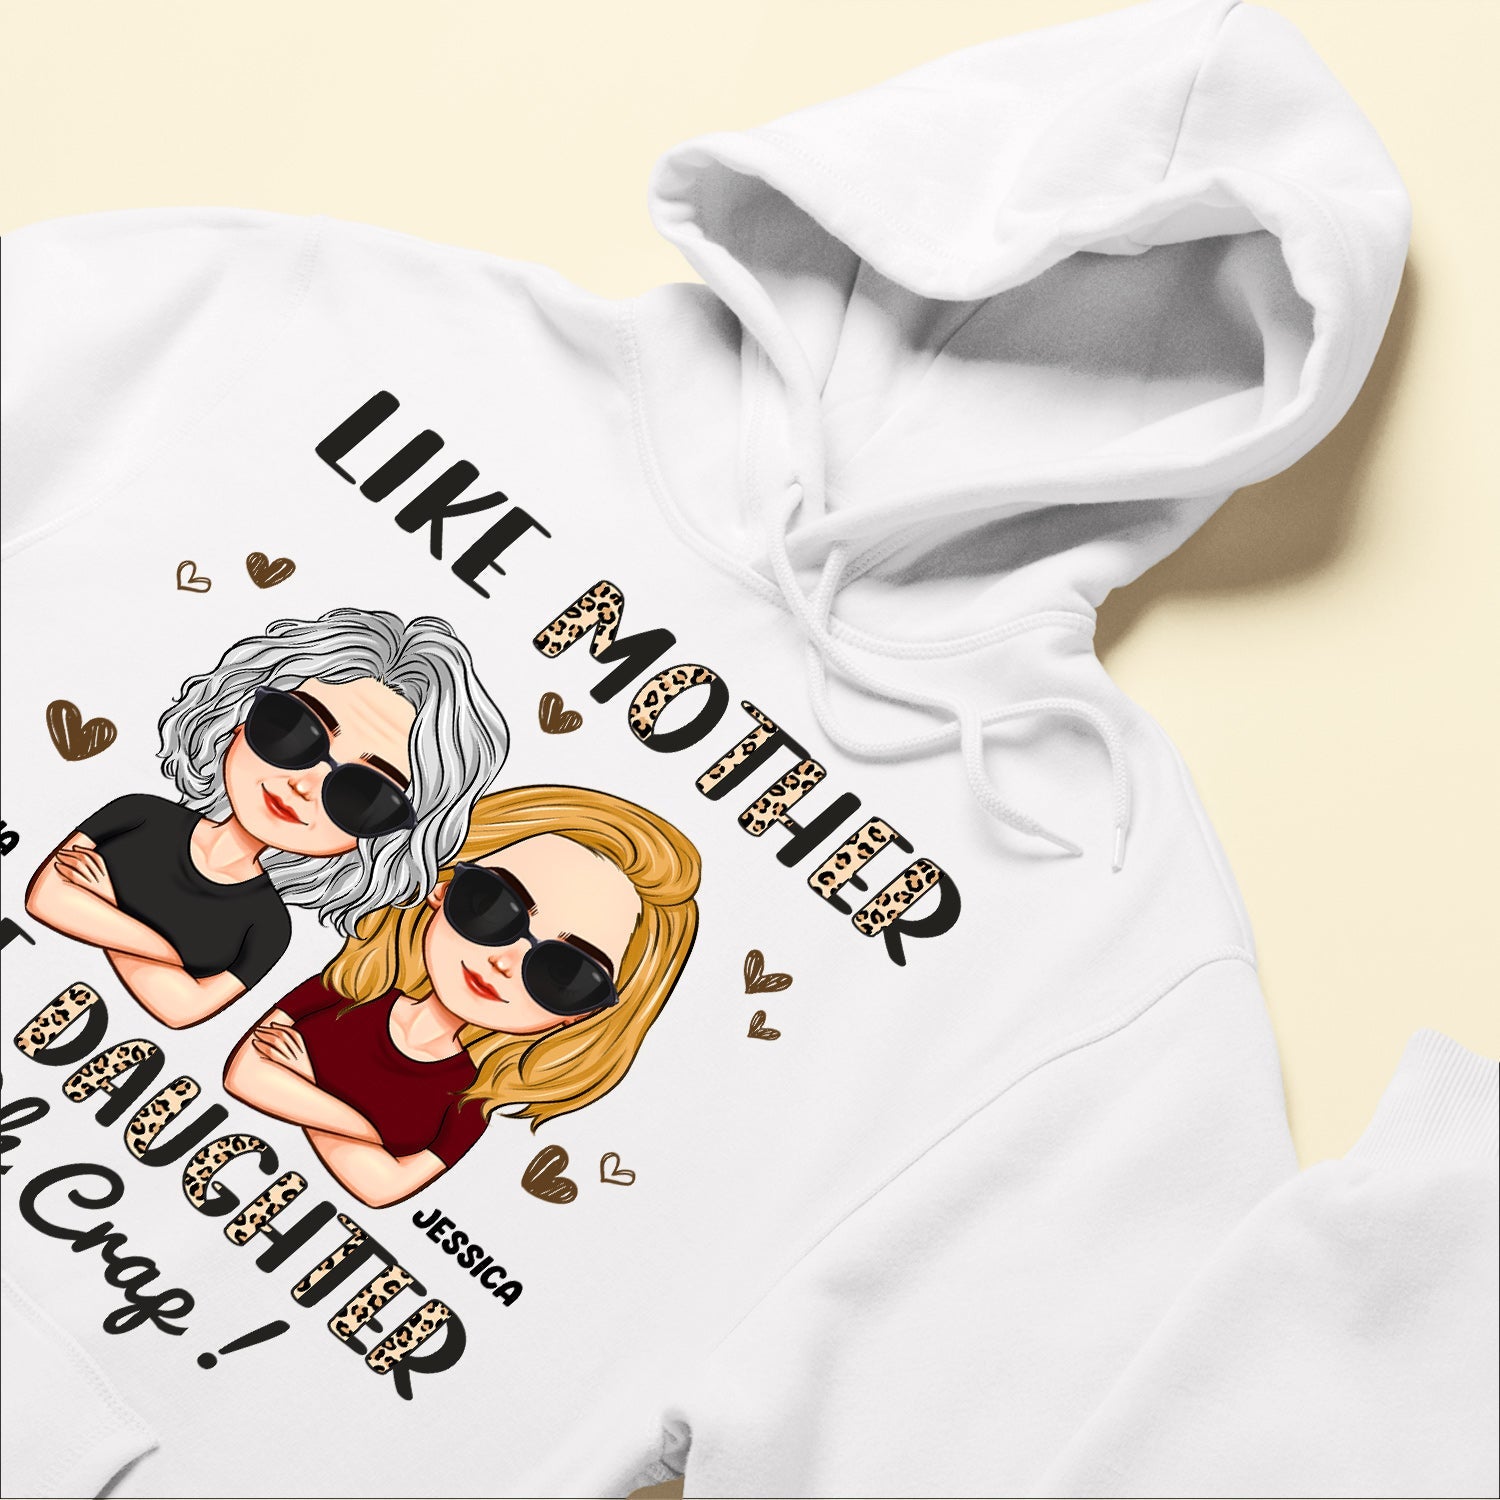 Like Mother Like Daughter Oh Crap Leopard - Personalized Shirt - Mothe –  Macorner